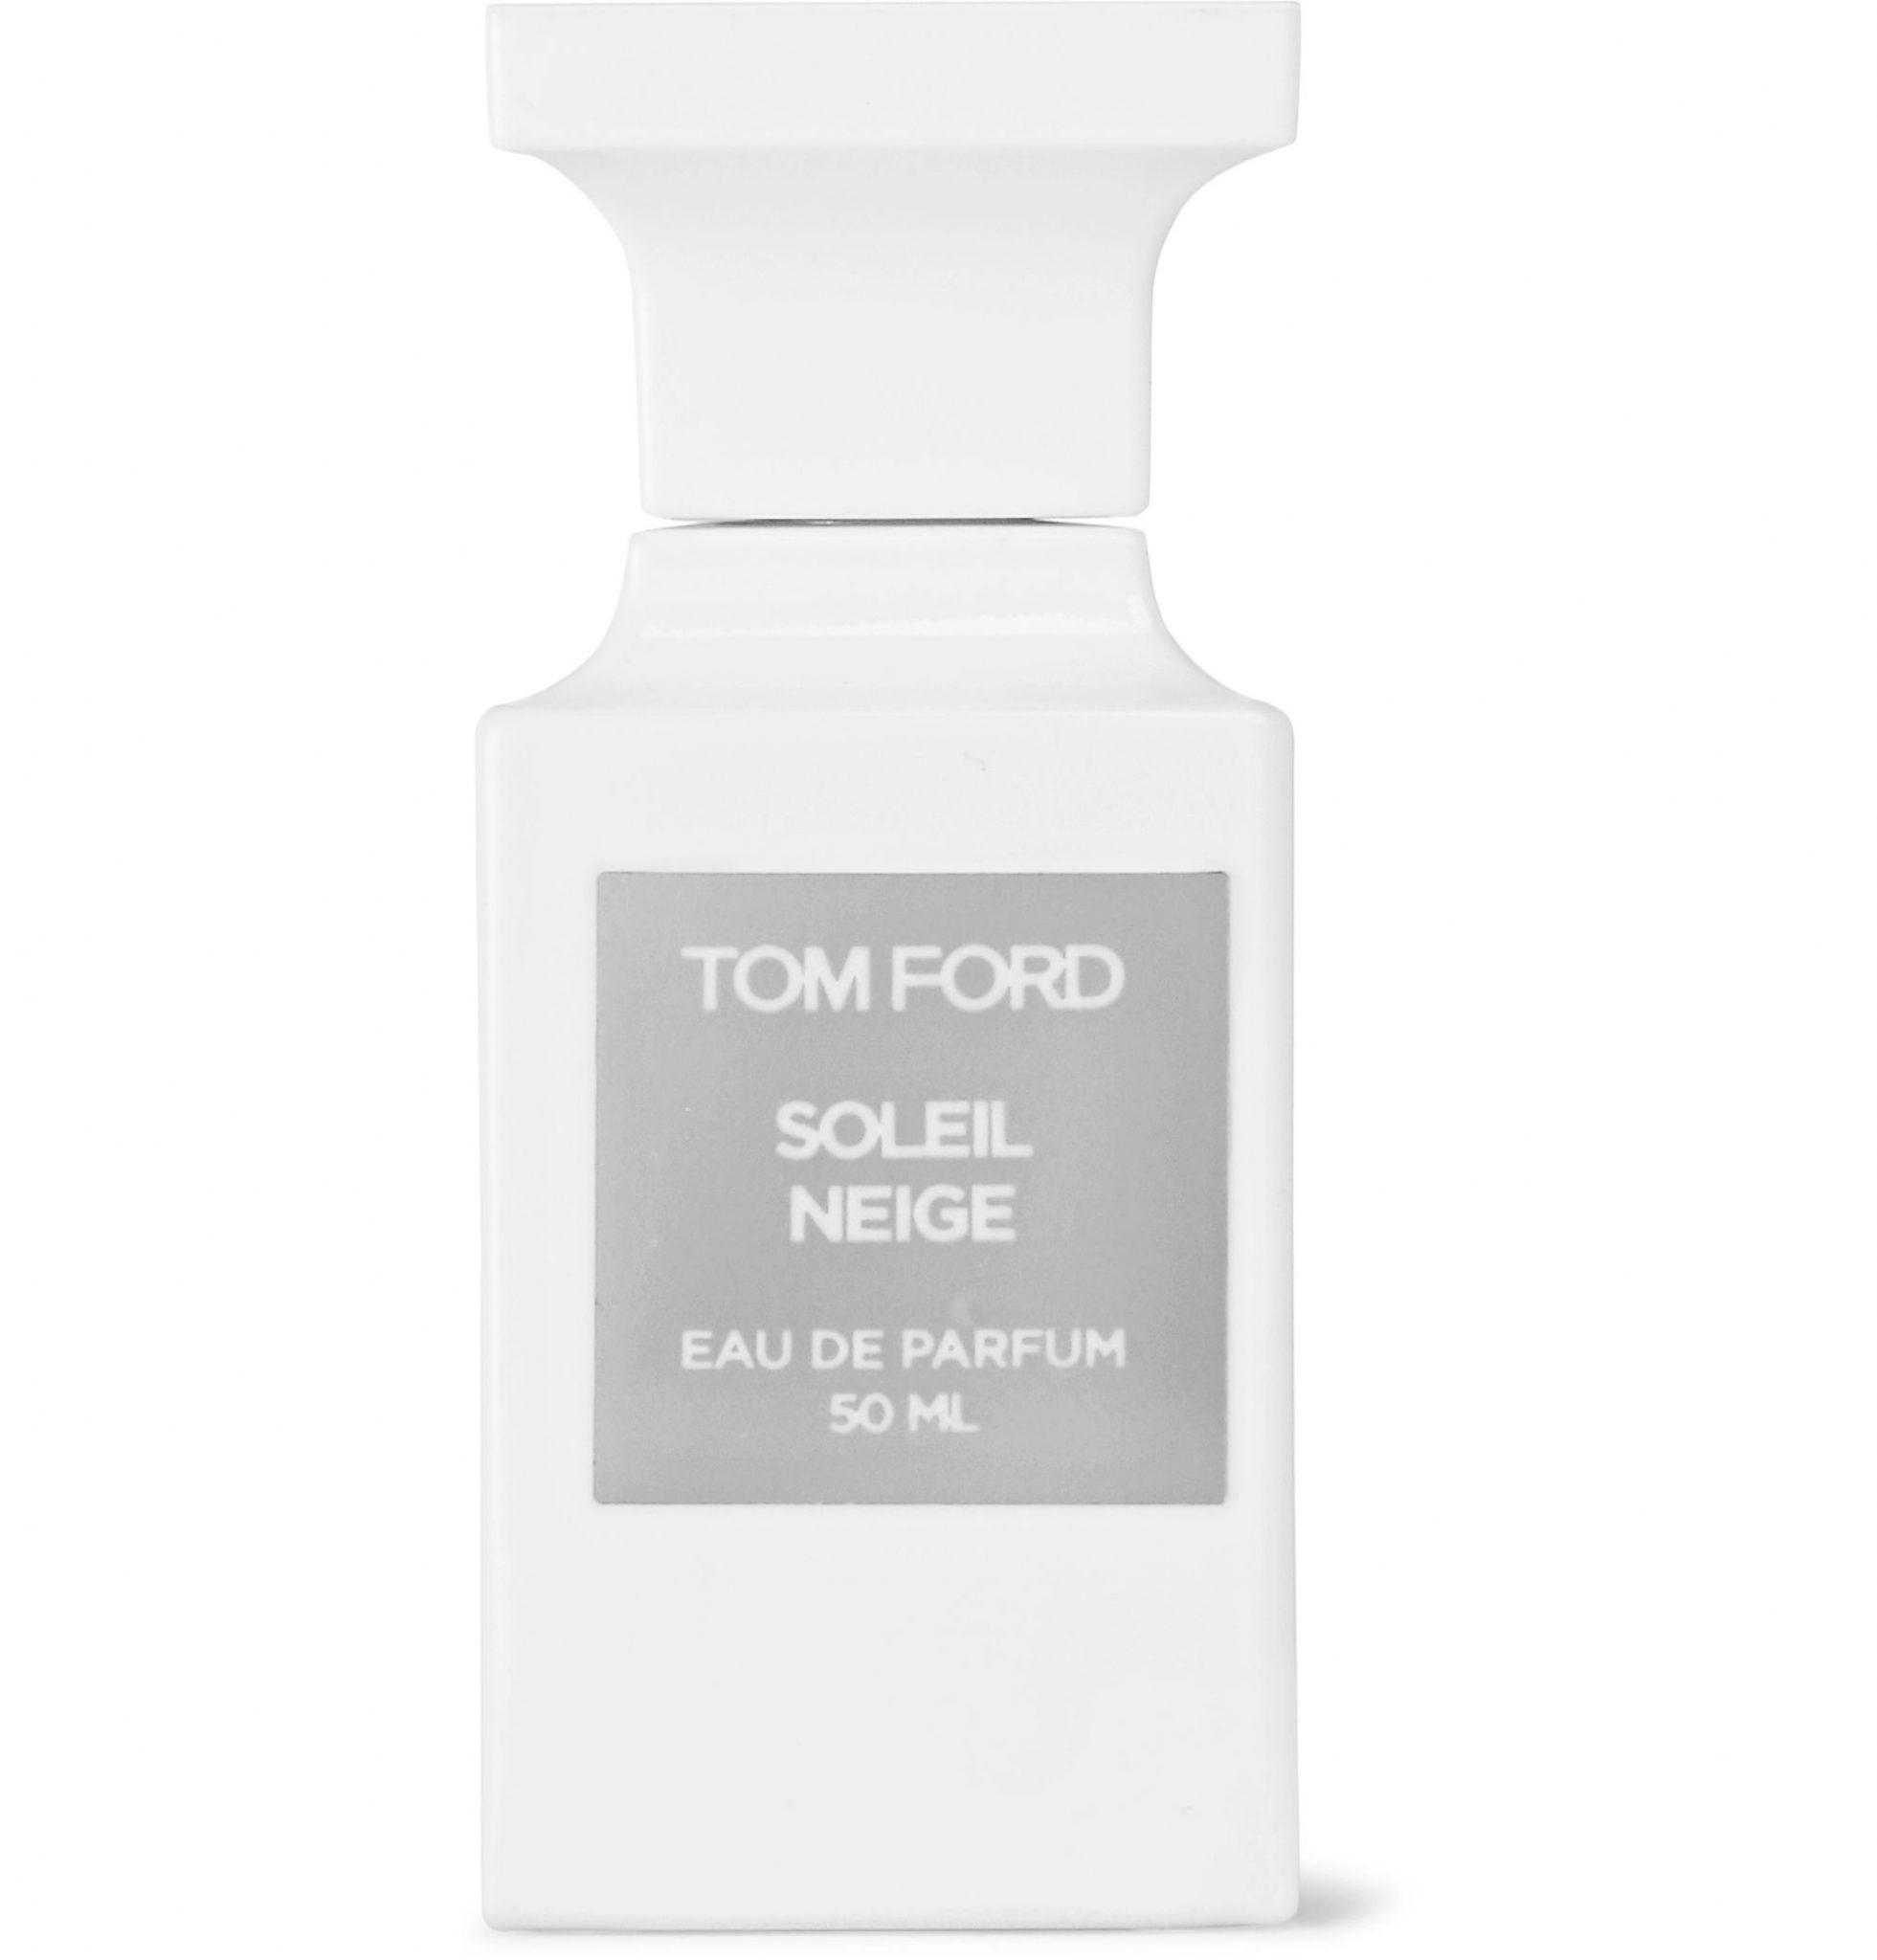 Tom Ford Soleil Neige Eau de Parfum 50ml EDP Spray - SoLippy